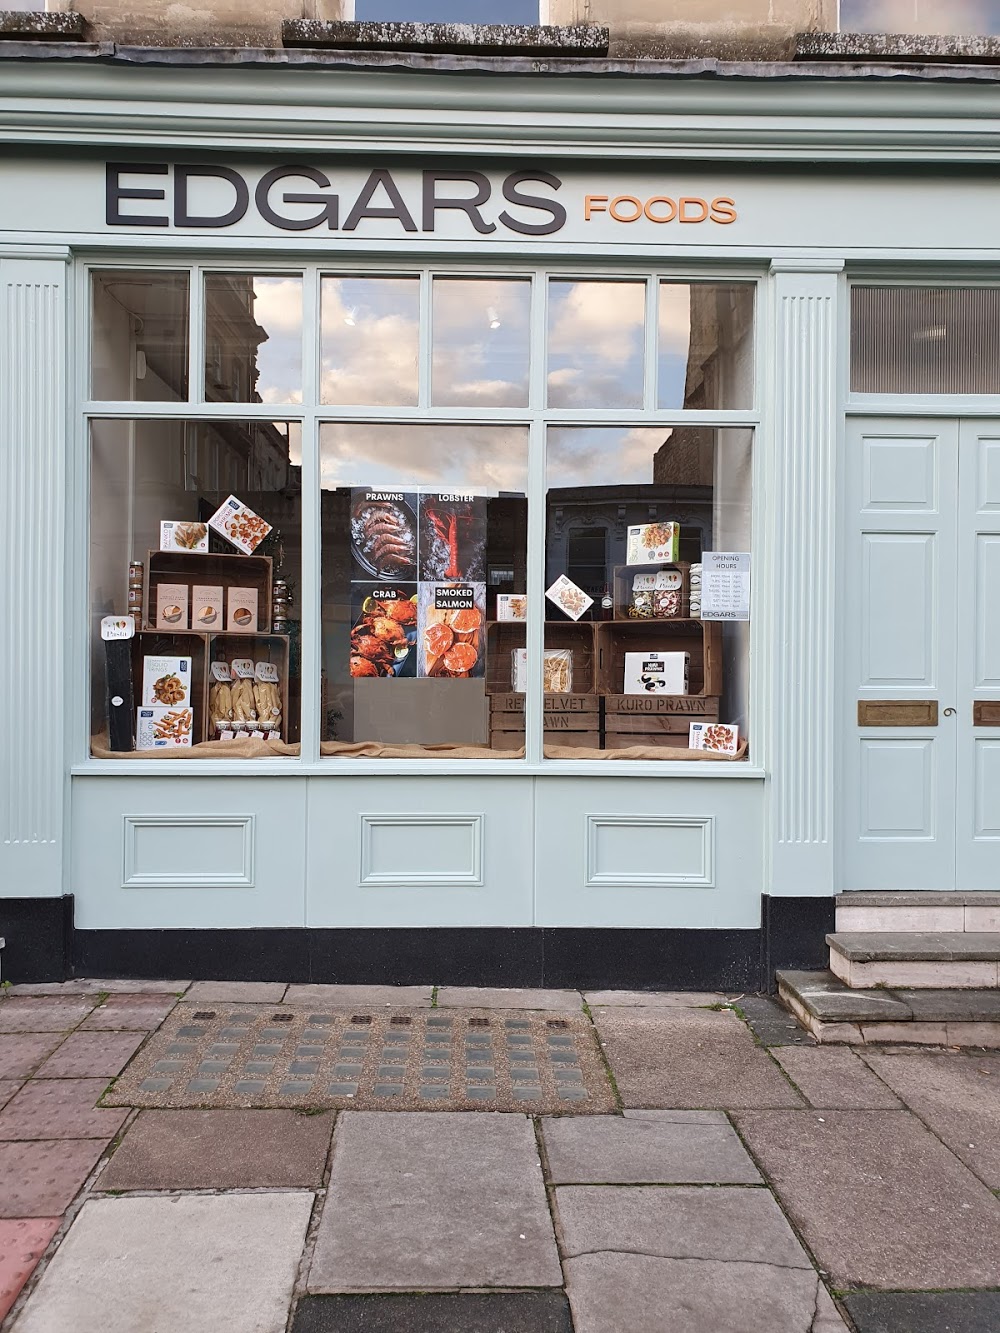 EDGARS Foods